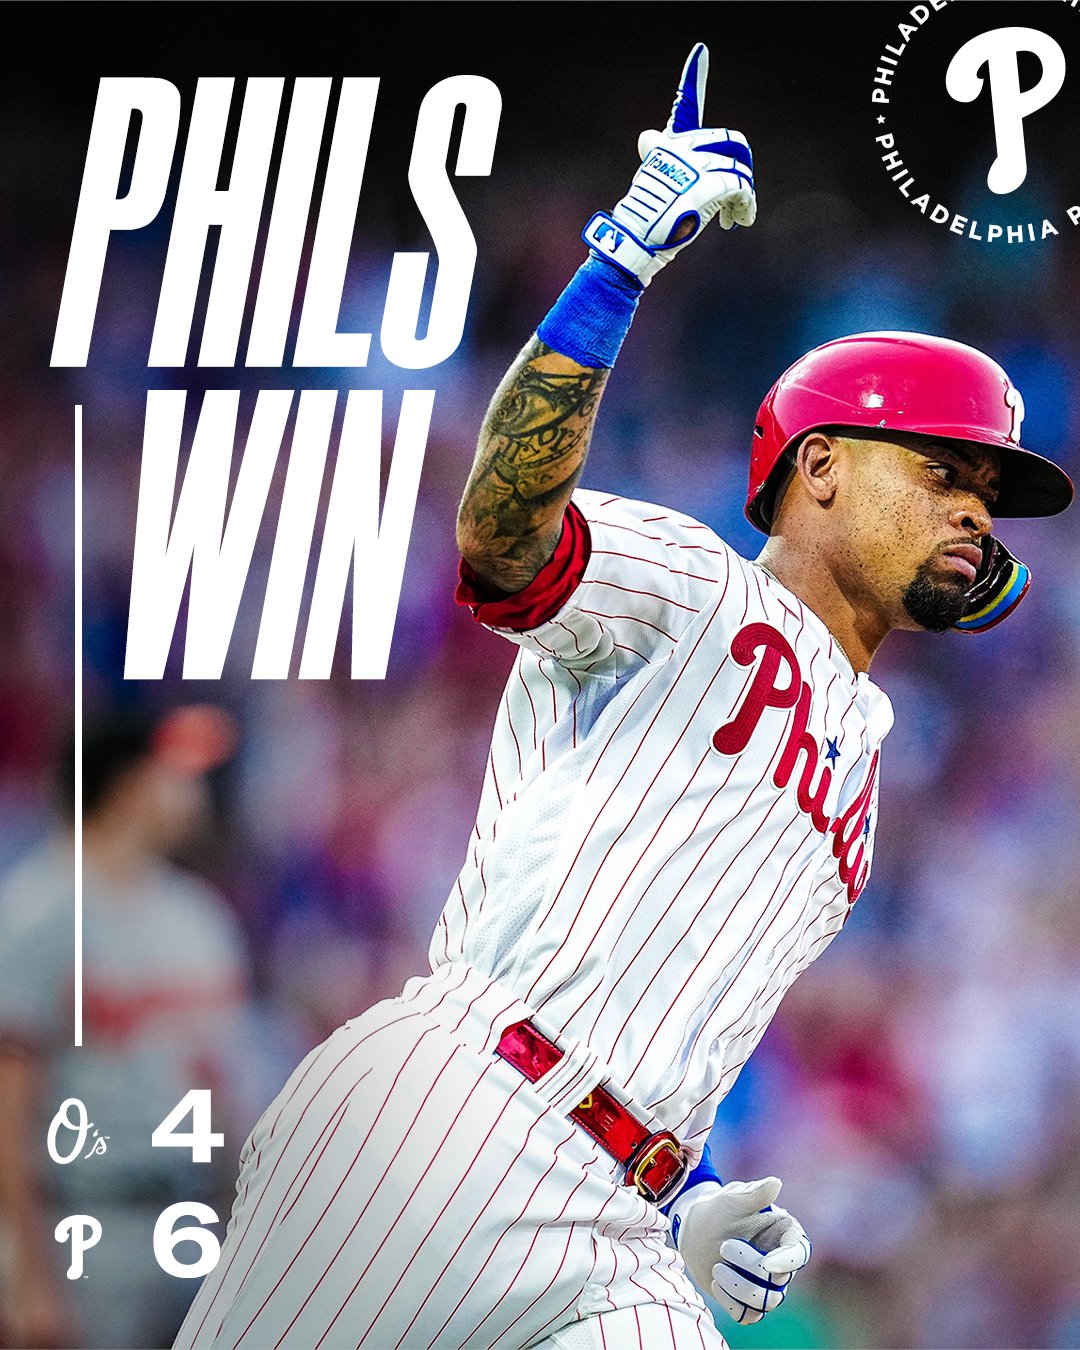 Philadelphia Phillies on X: #RingTheBell  / X